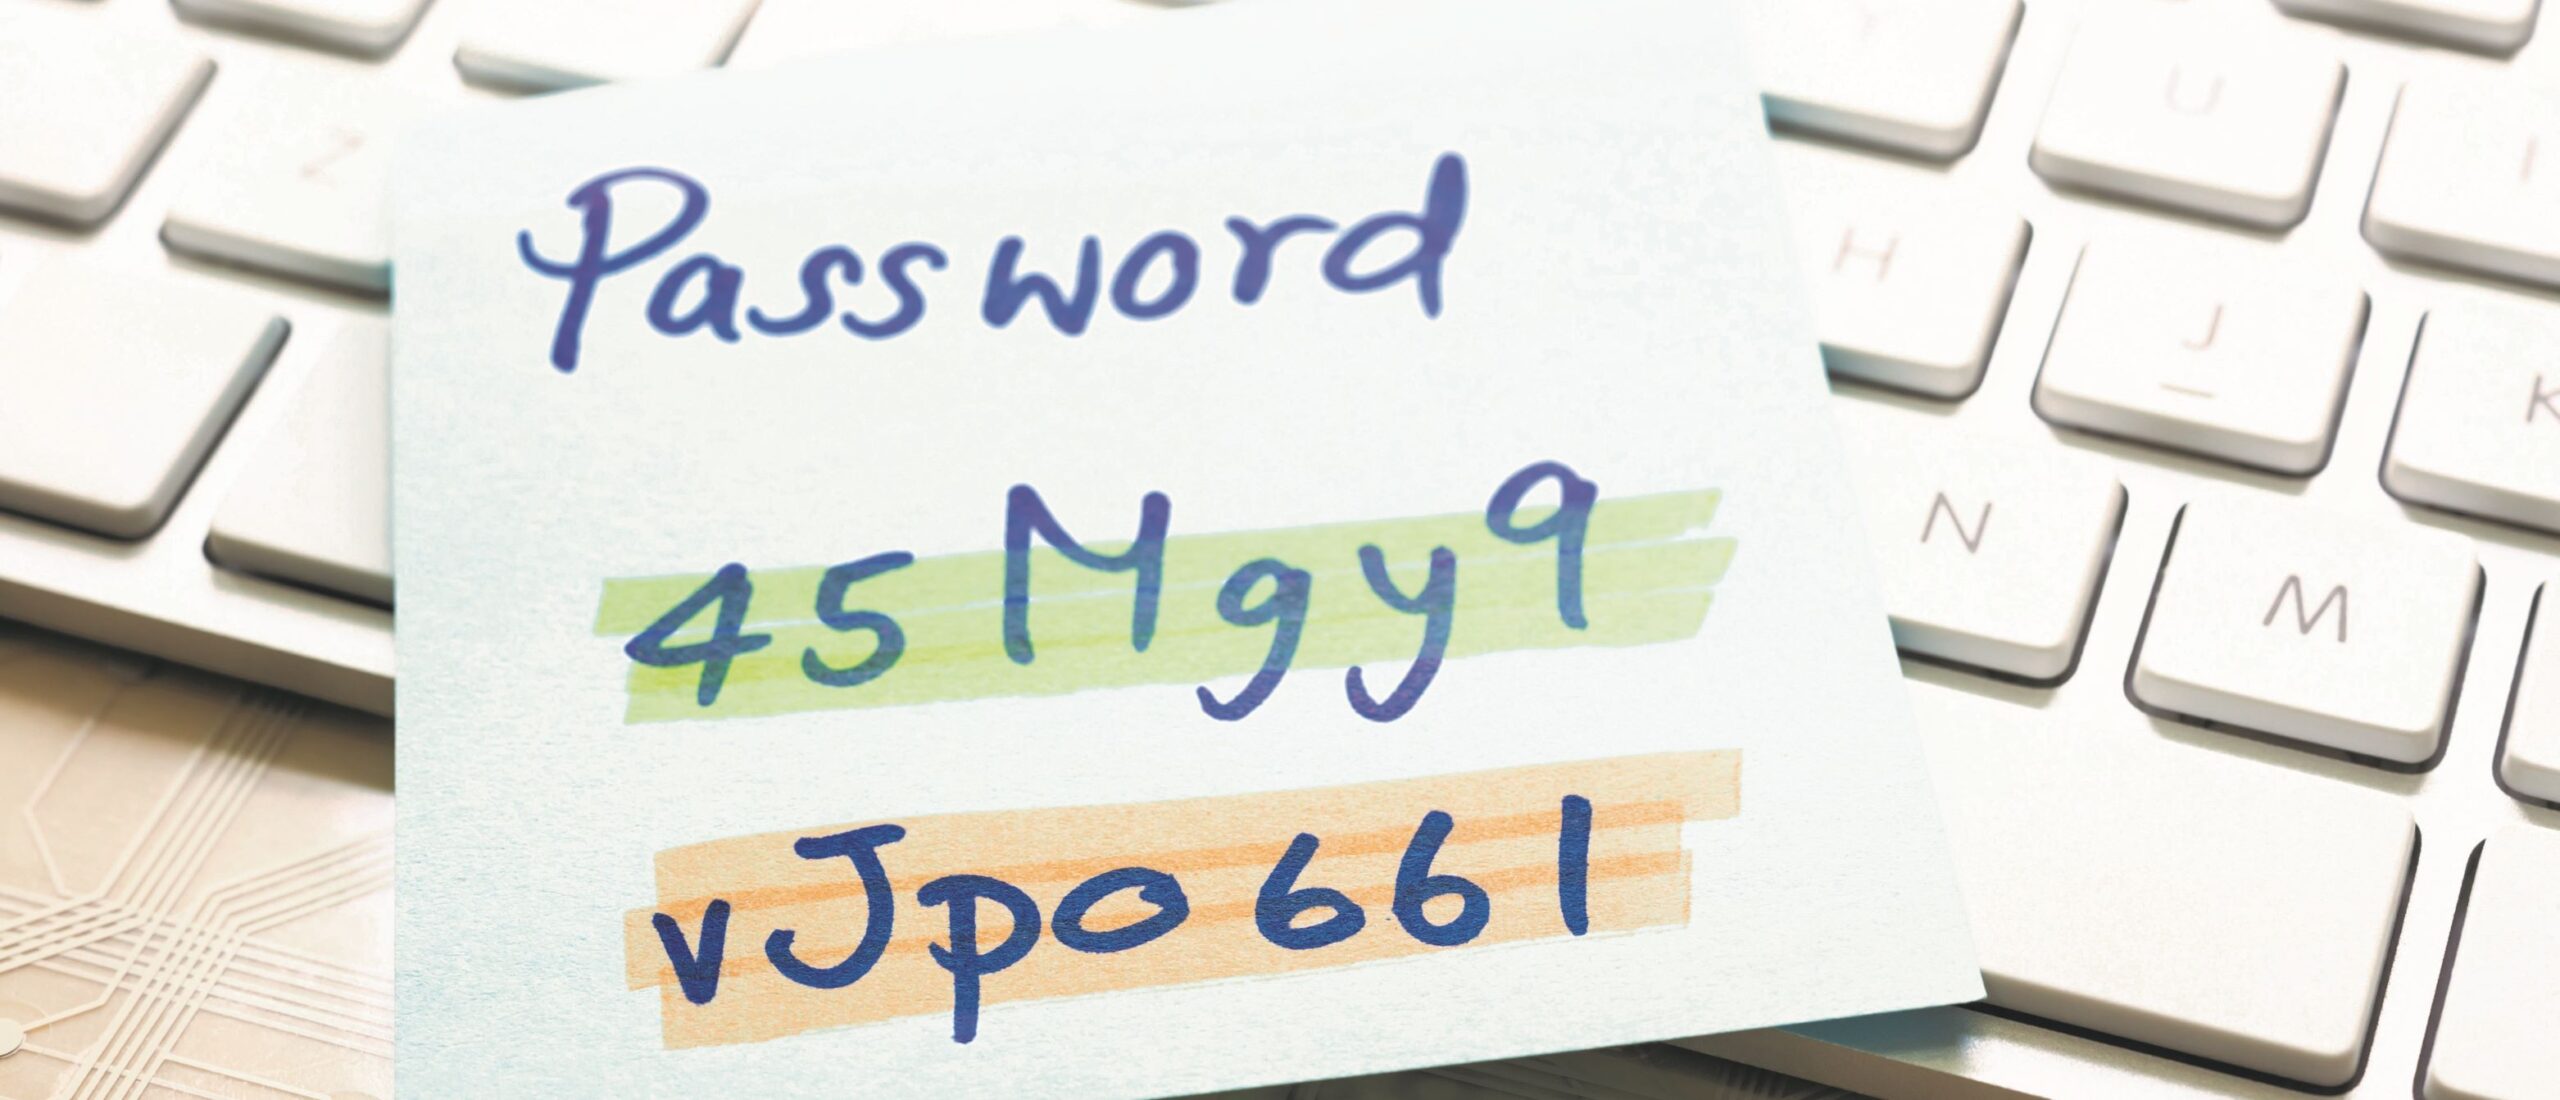 CM Regent Blog - Sticky Note With Passwords